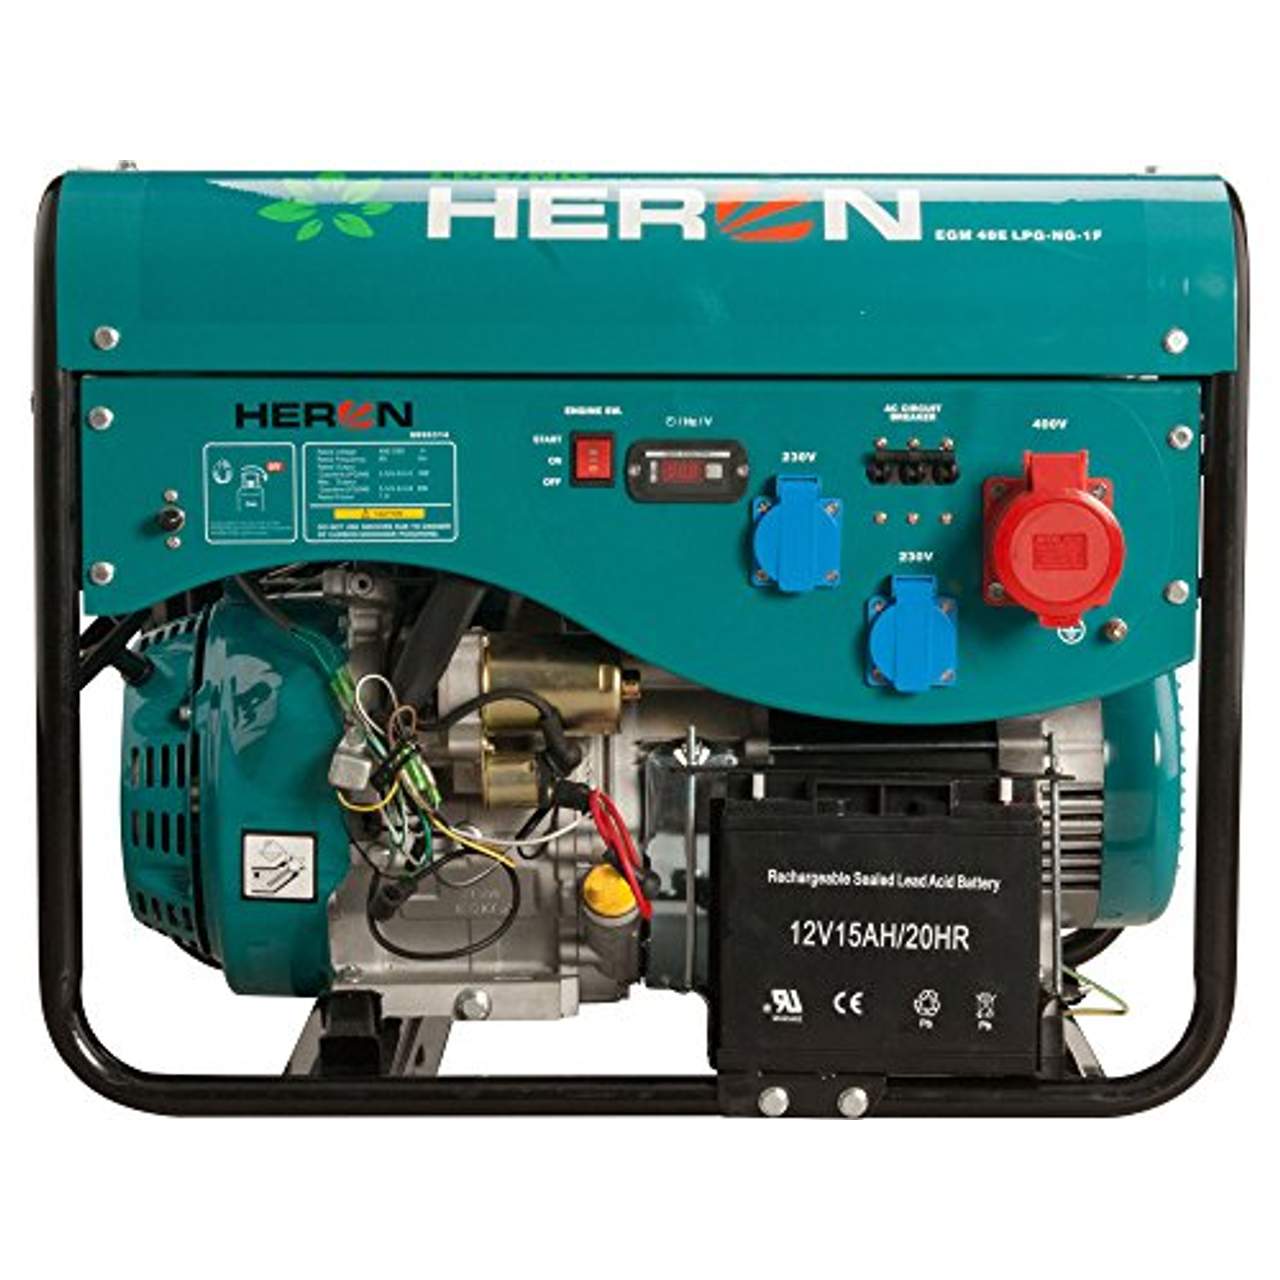 HERON Benzin LPG NG Hybrid-Motorgenerator 13HP